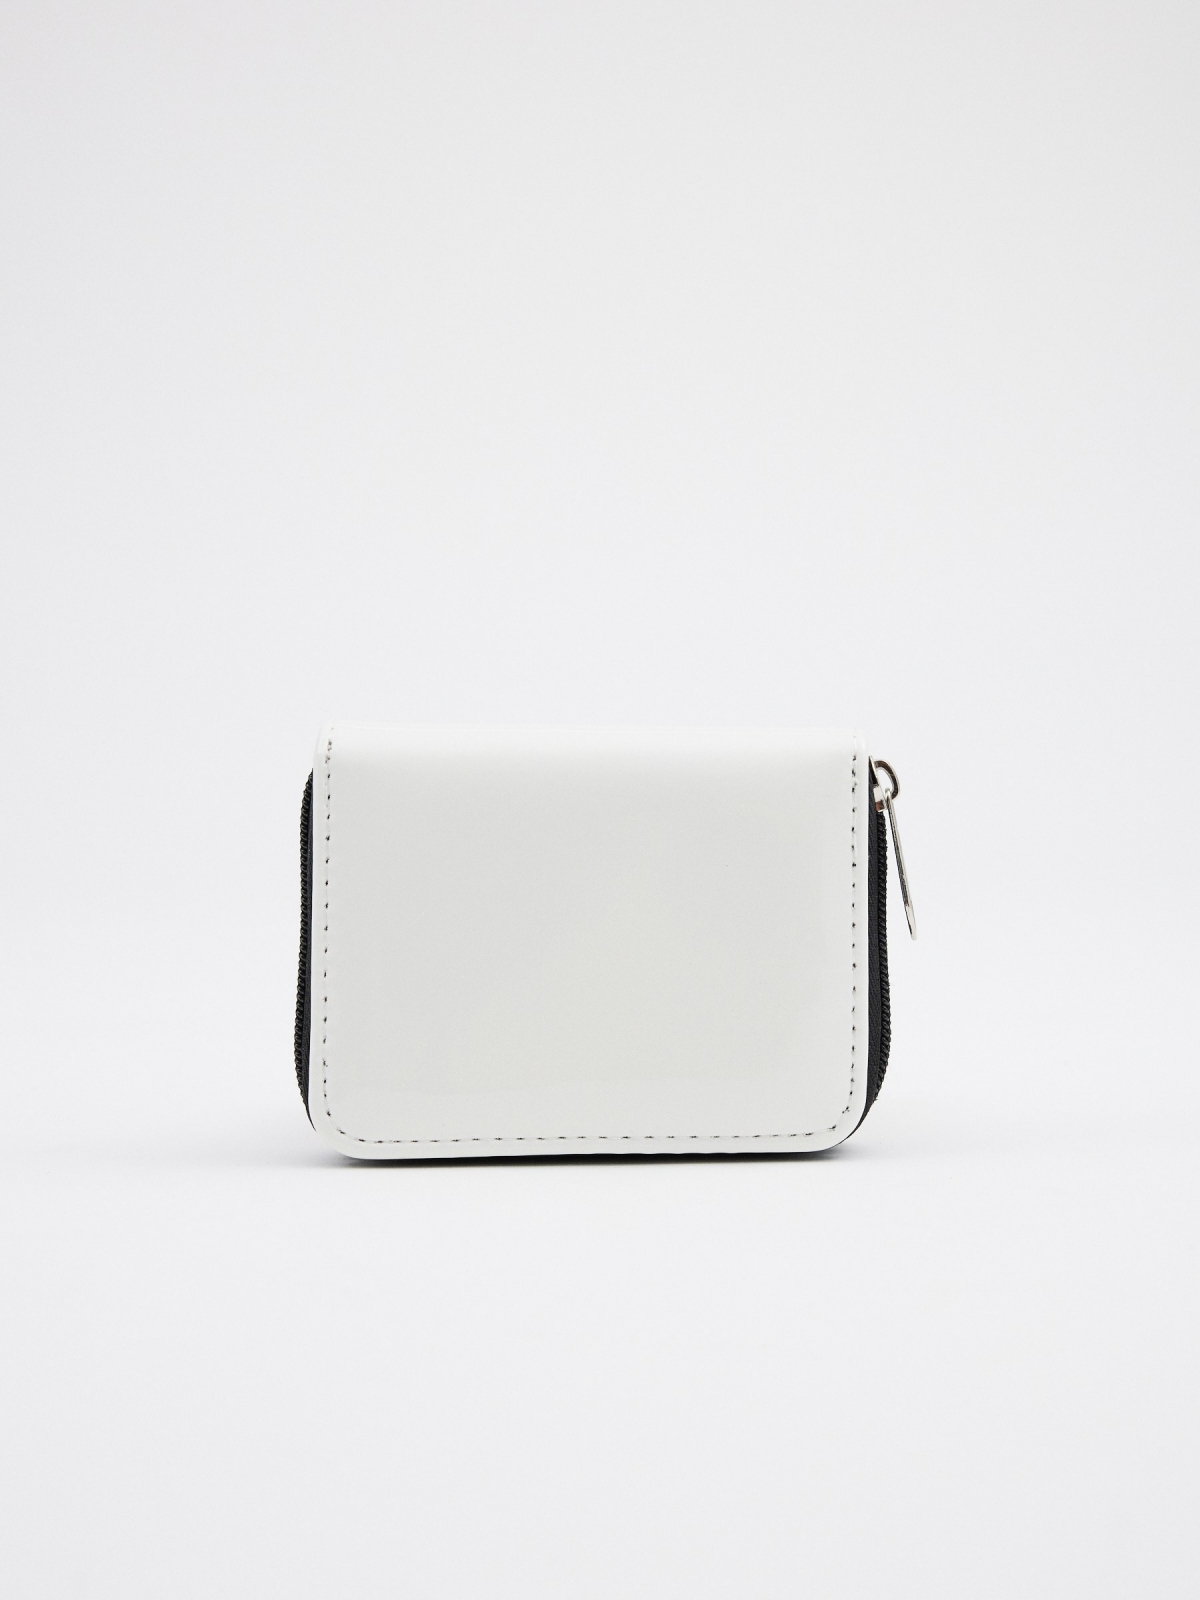 Zipped patent leather purse white